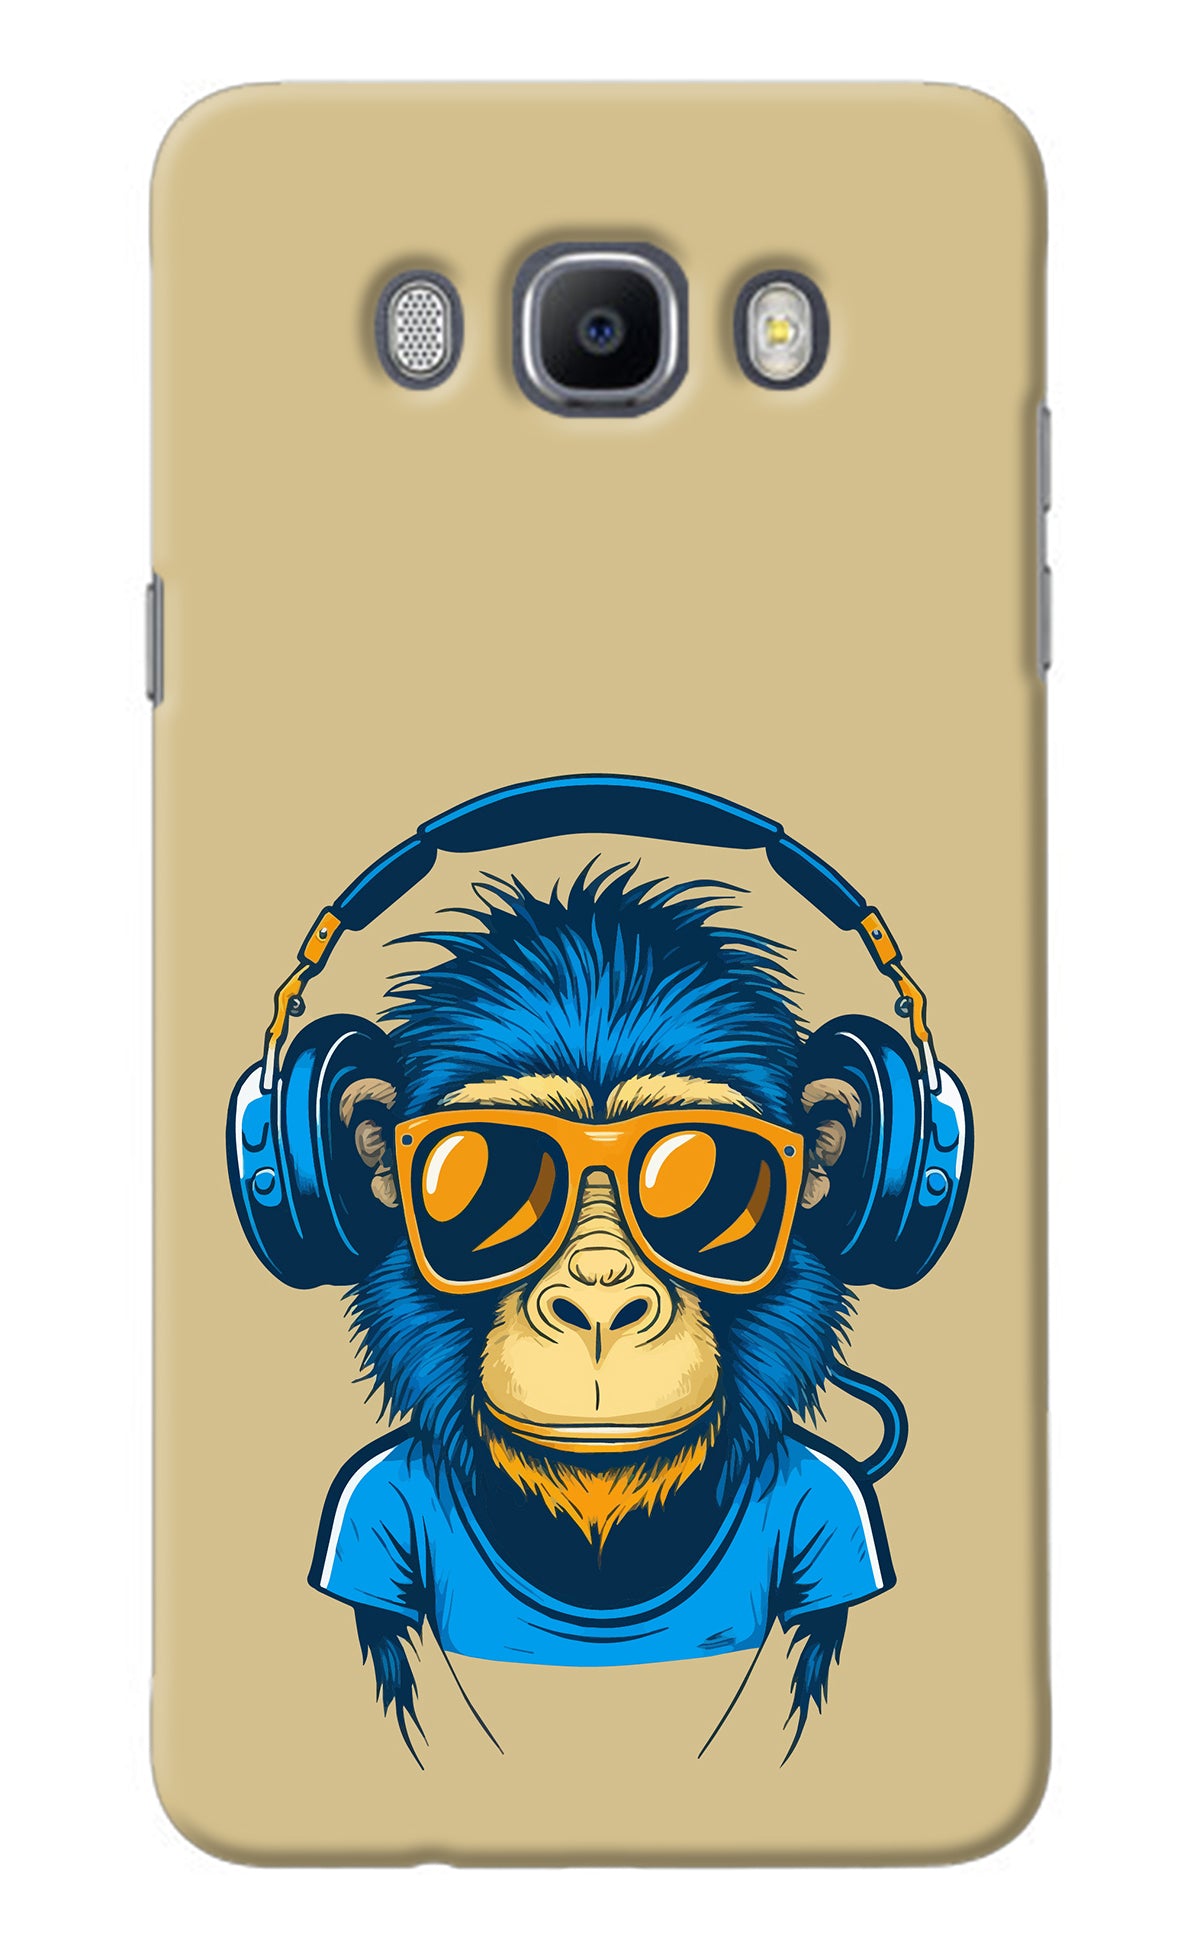 Monkey Headphone Samsung J7 2016 Back Cover